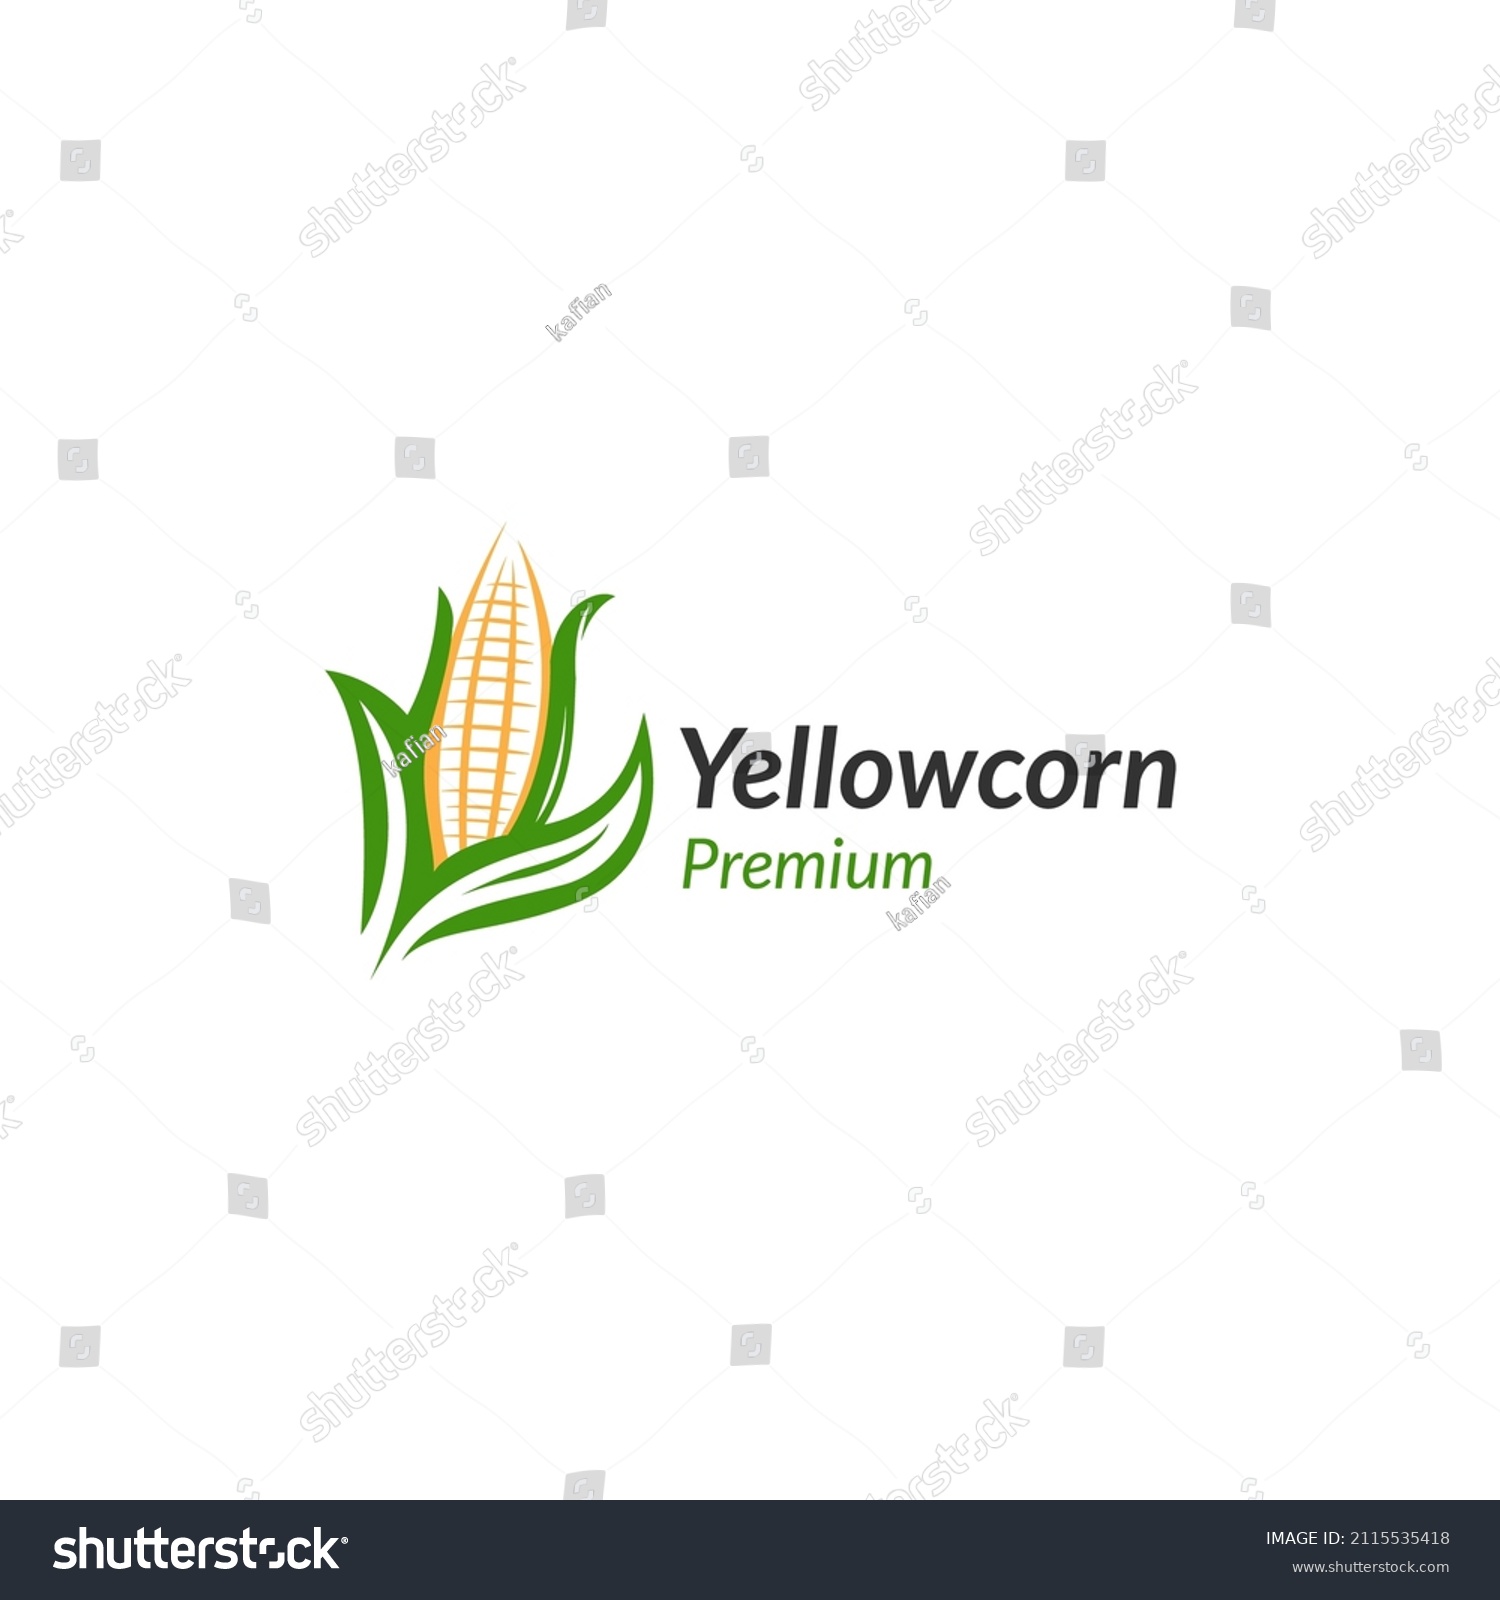 Corn farming logo design vector illustration. Abstract Agriculture Logo Template.  #2115535418